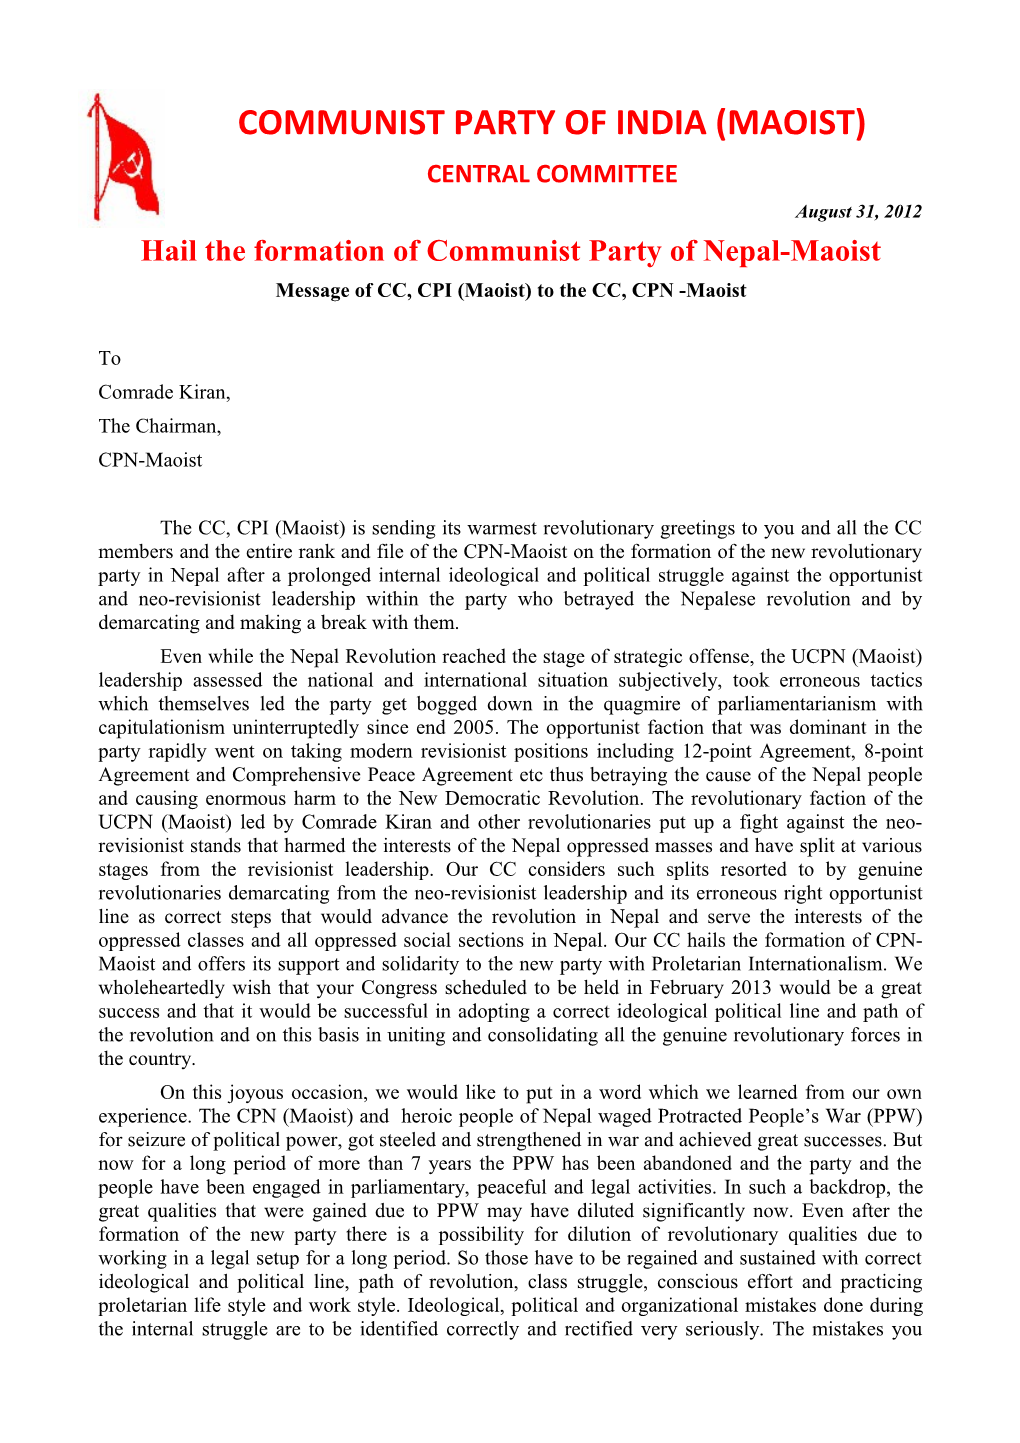 Condemn the Arrests of Maoist Activists in Kolkata and Mumbai